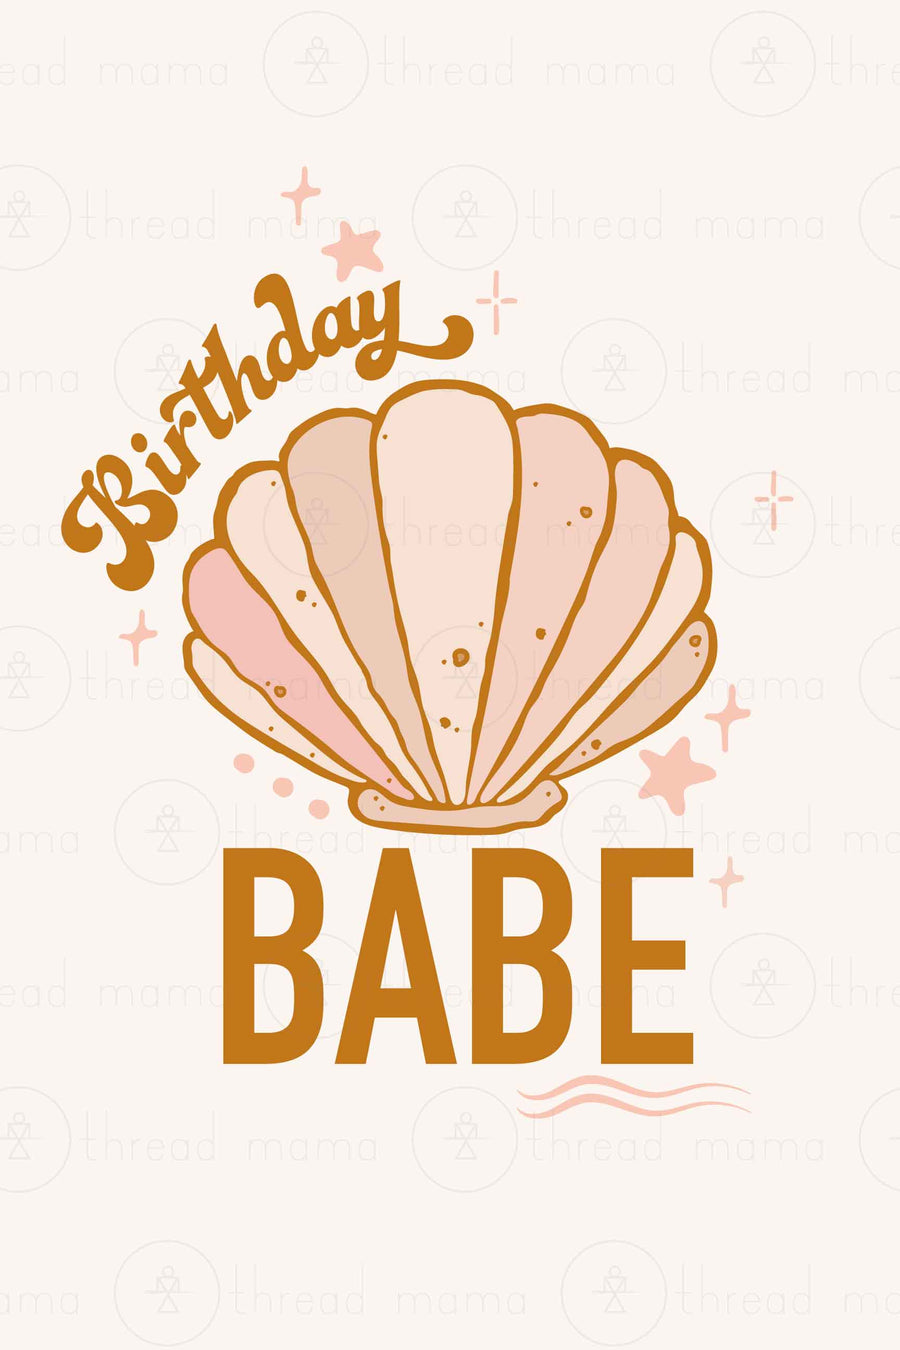 Birthday Babe Collection (Printable Poster)